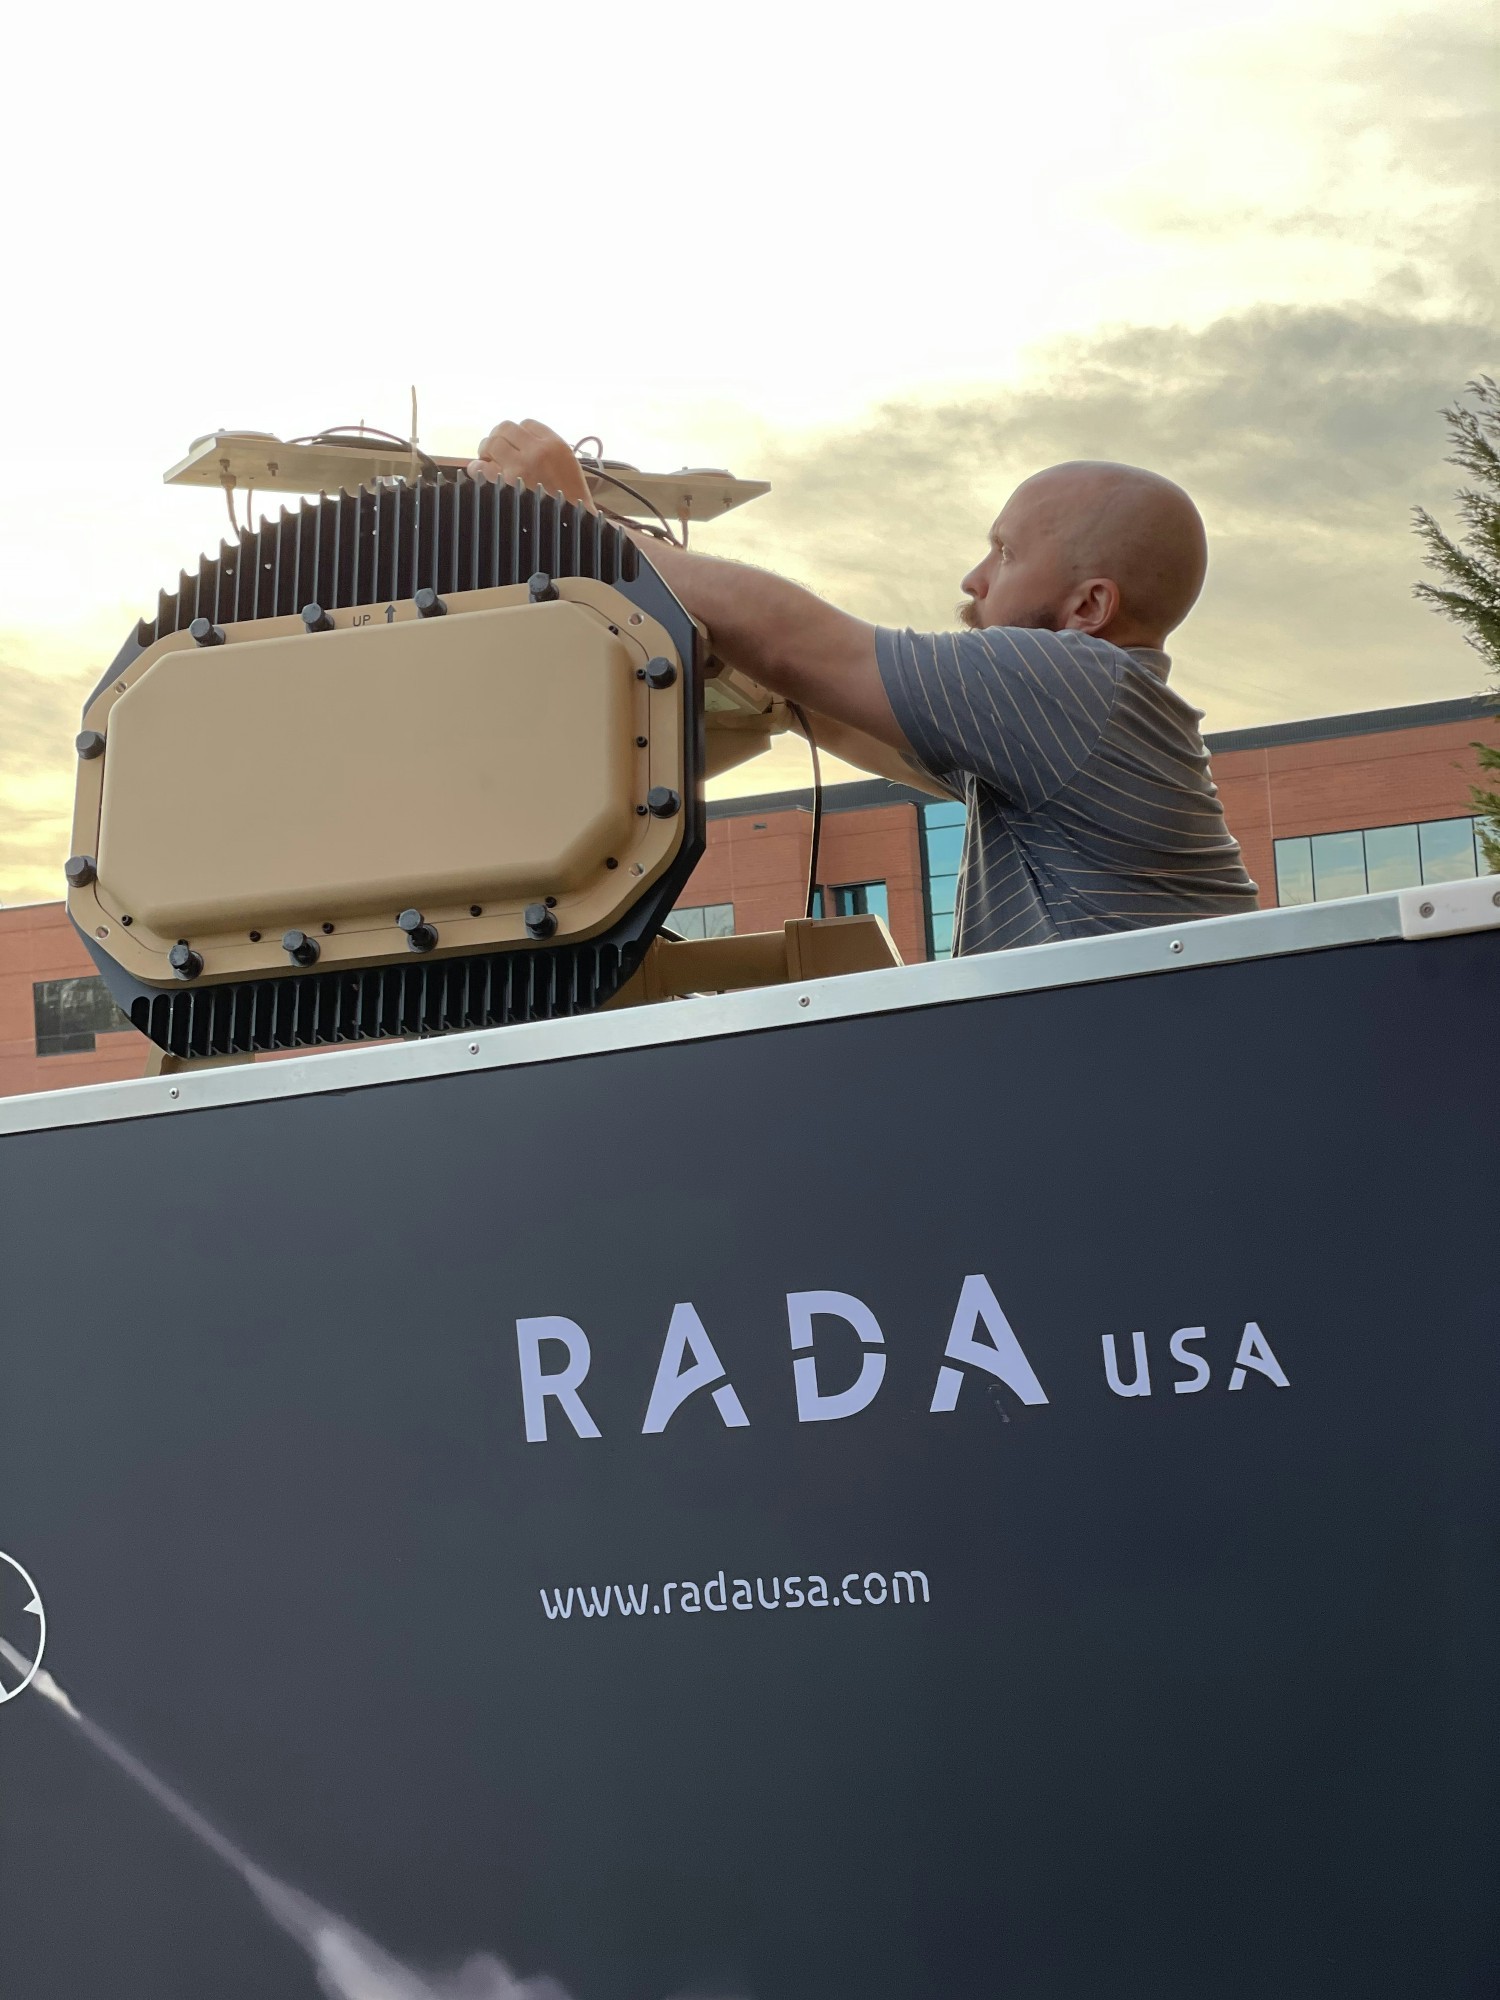 RADA USA engineer testing radar systems